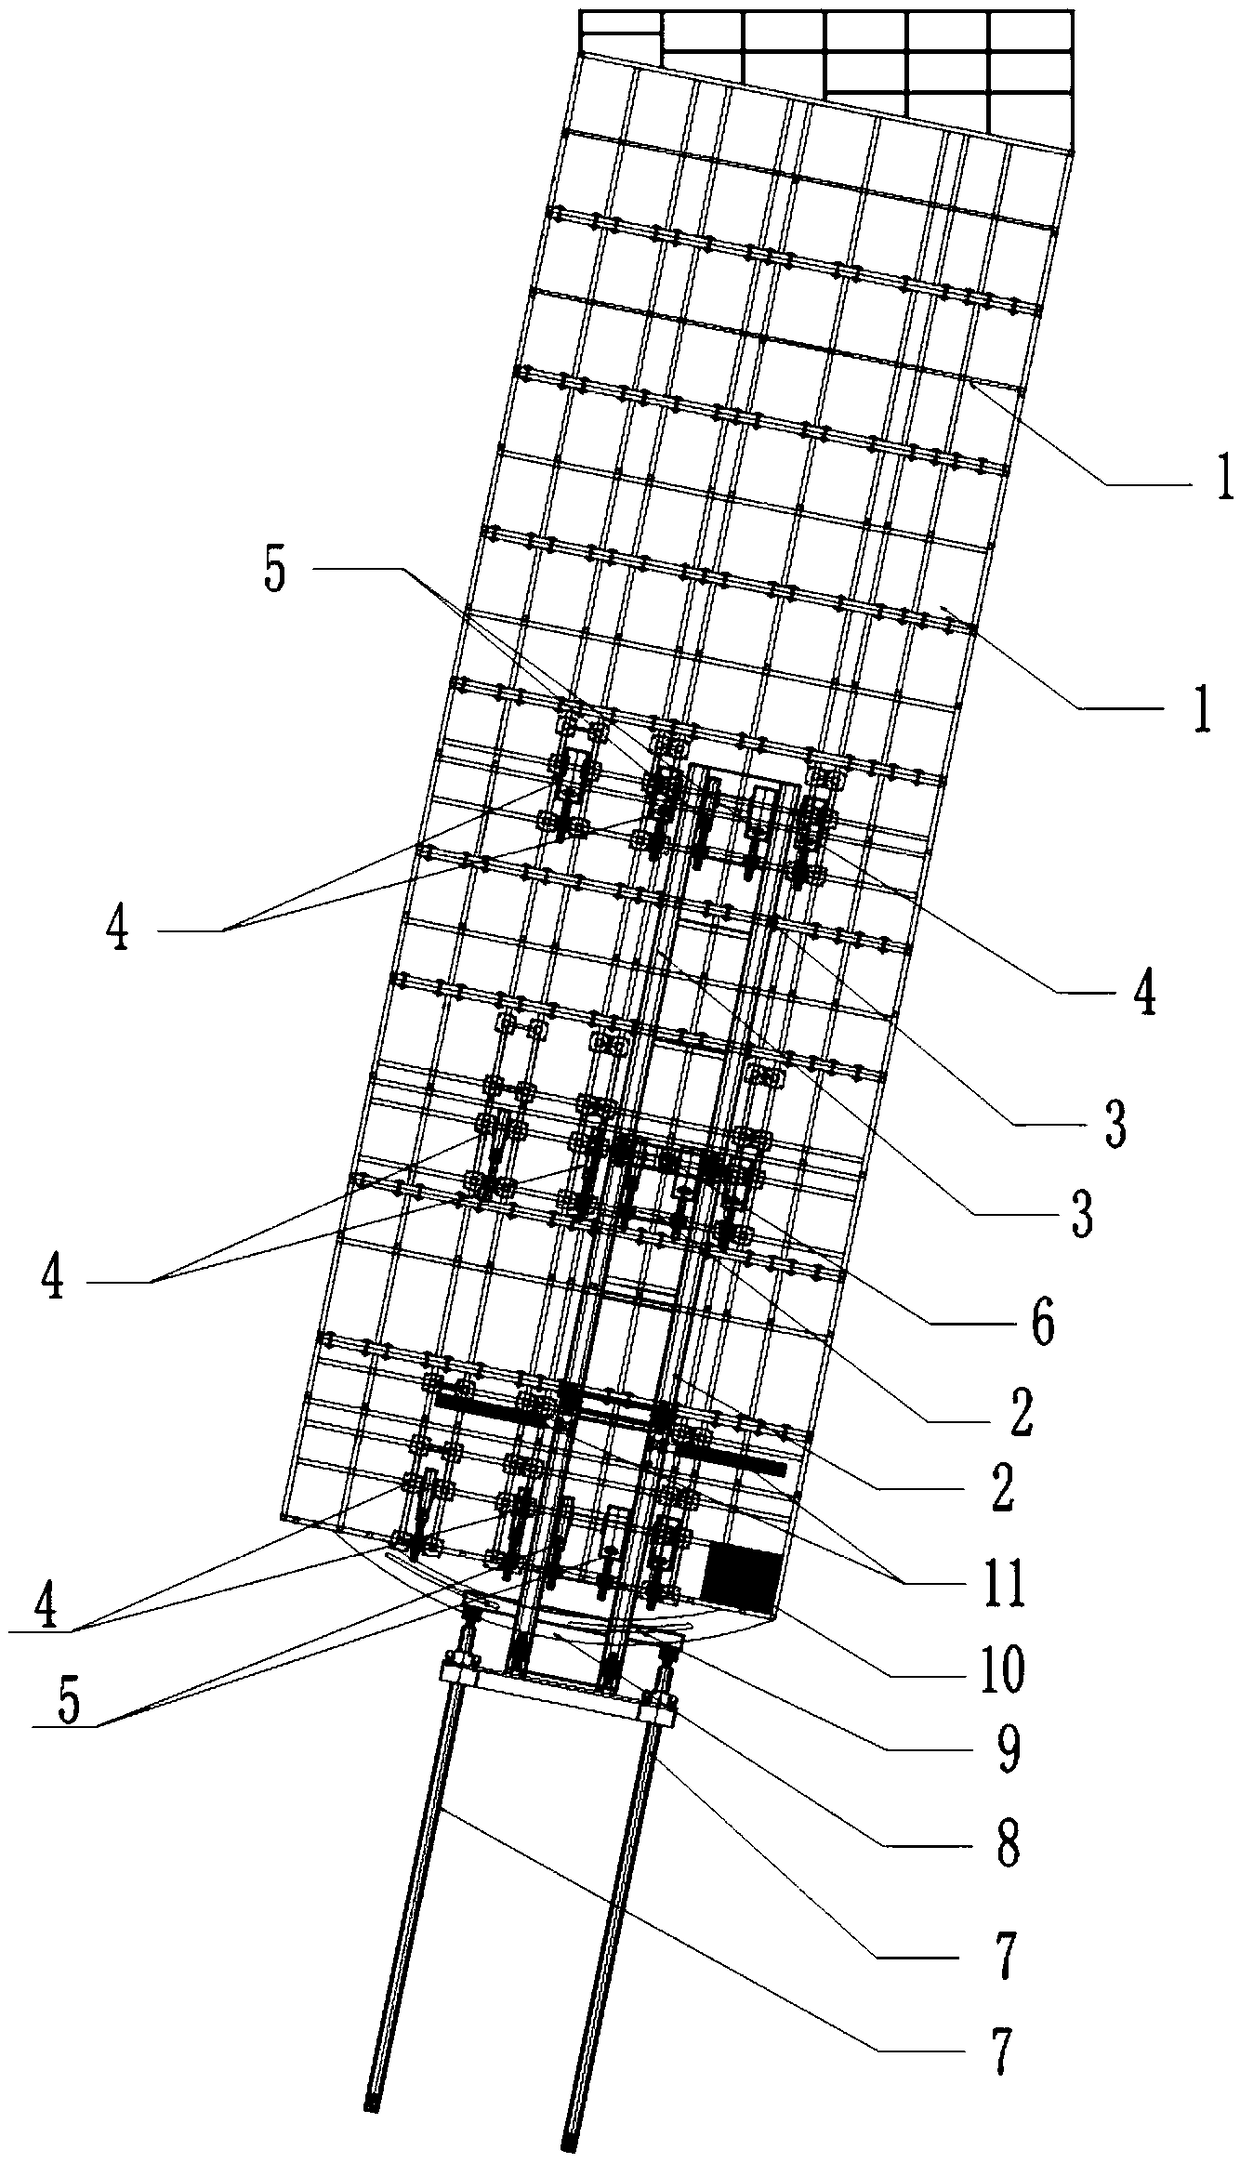 Angle-adjustable hydraulic inclined climbing framework